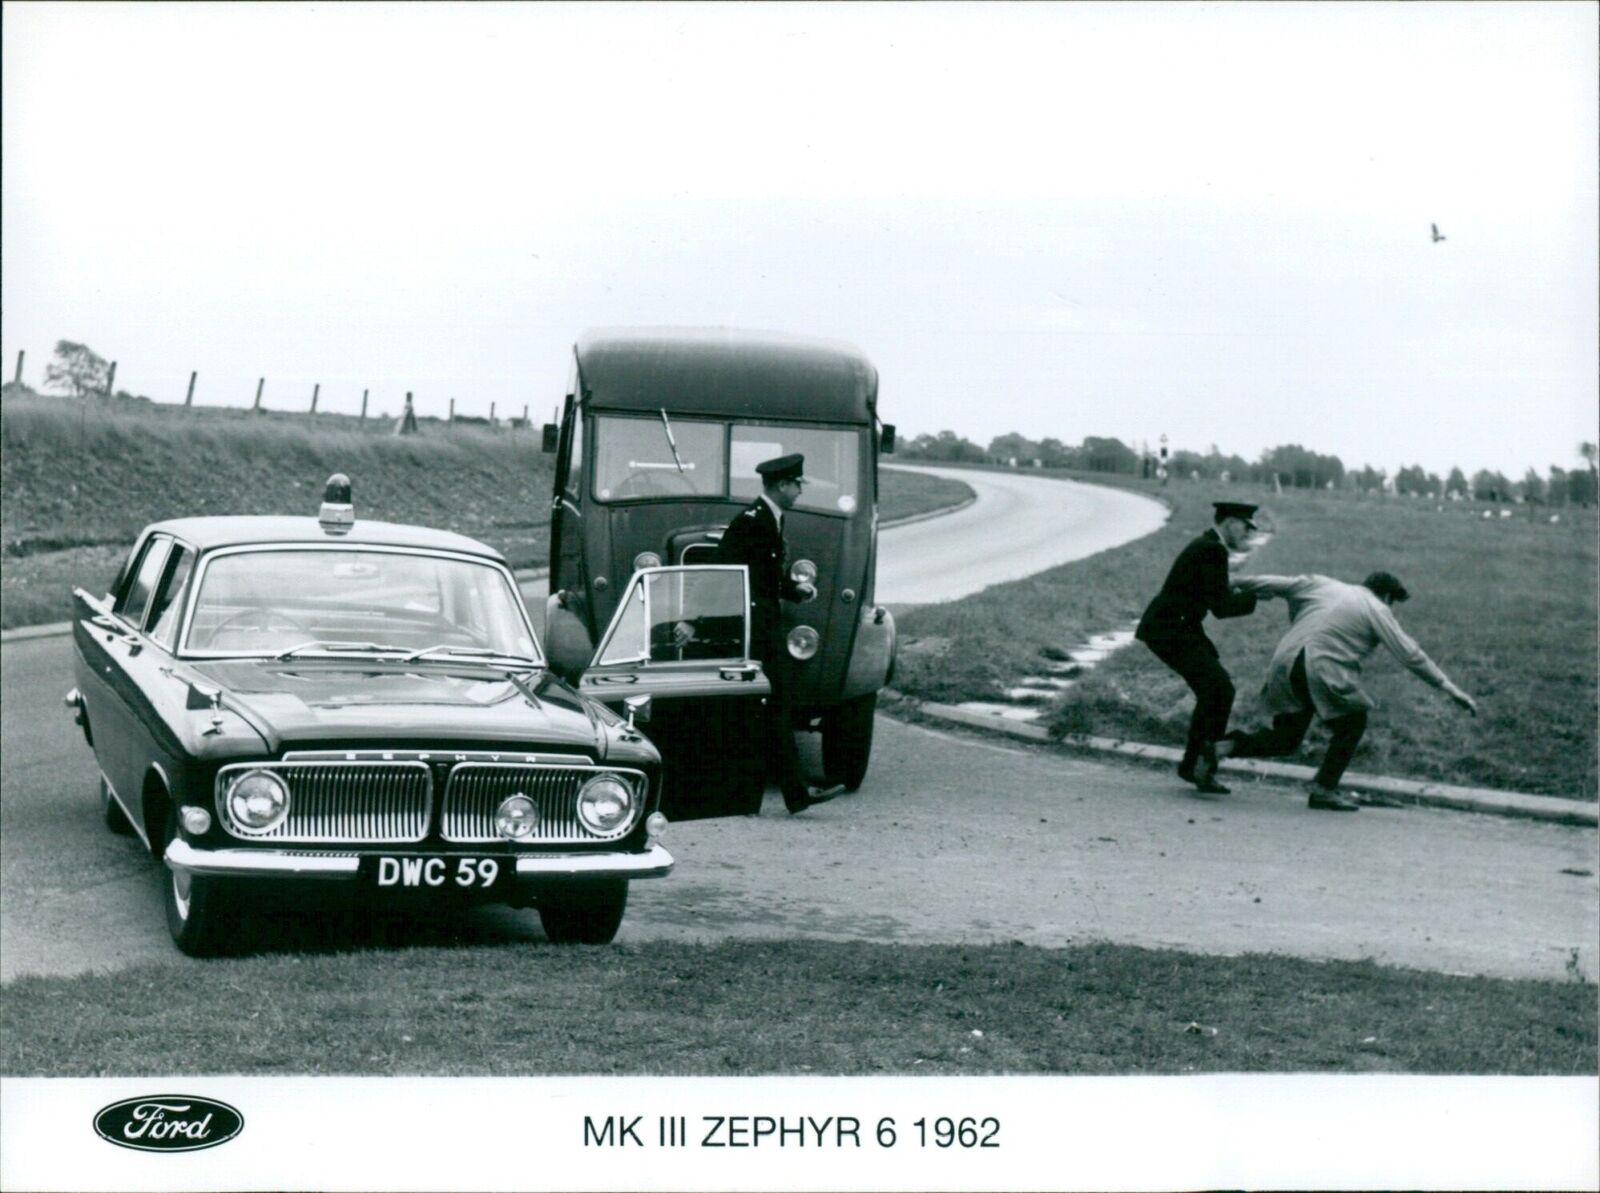 1962 Ford MK III Zephyr 6 - Vintage Photograph 4881167